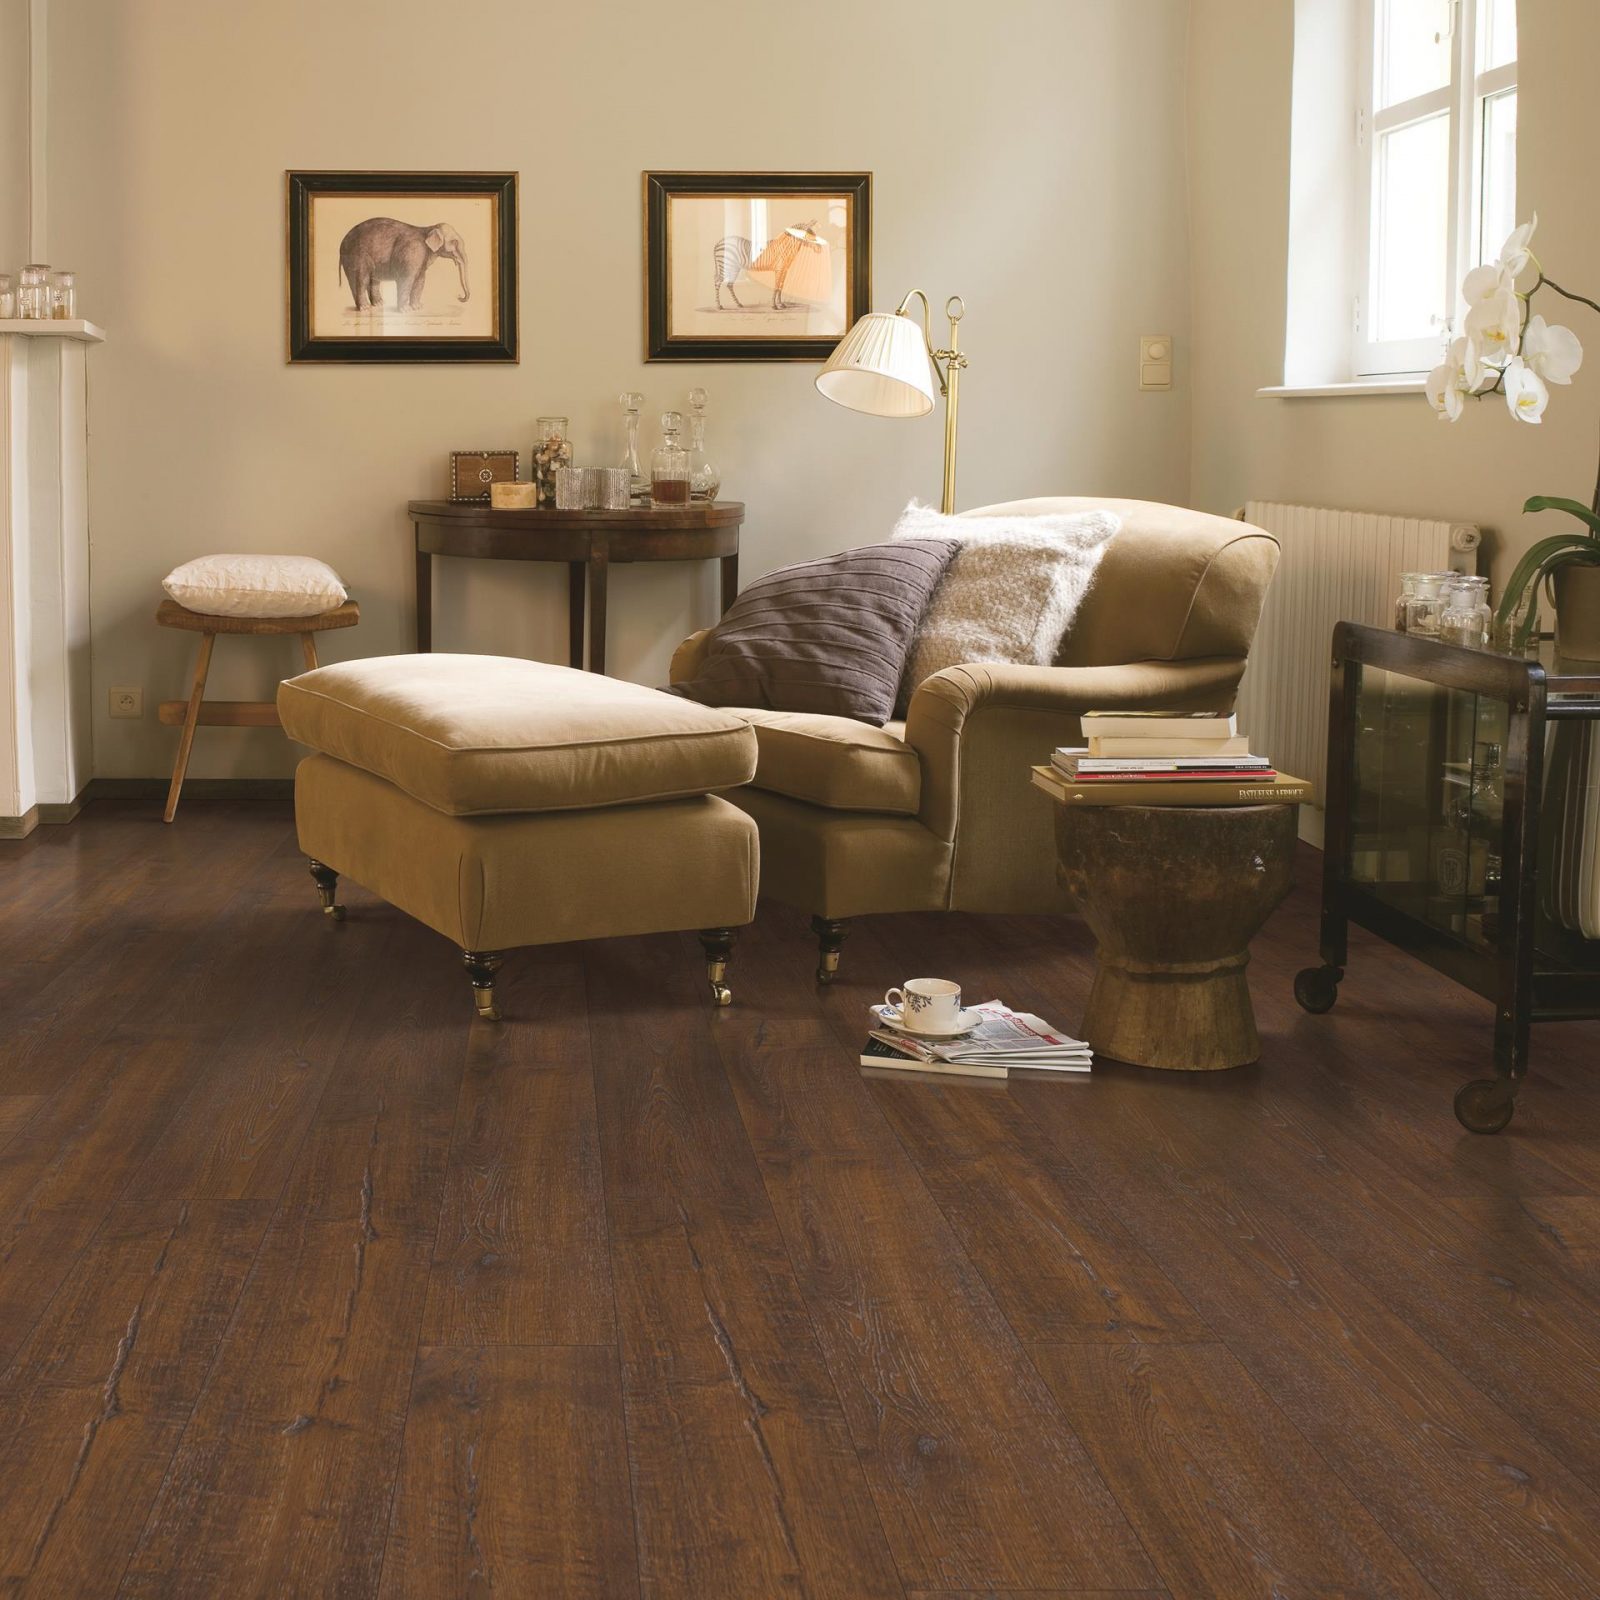 Dutch Oak flooring | West River Carpets